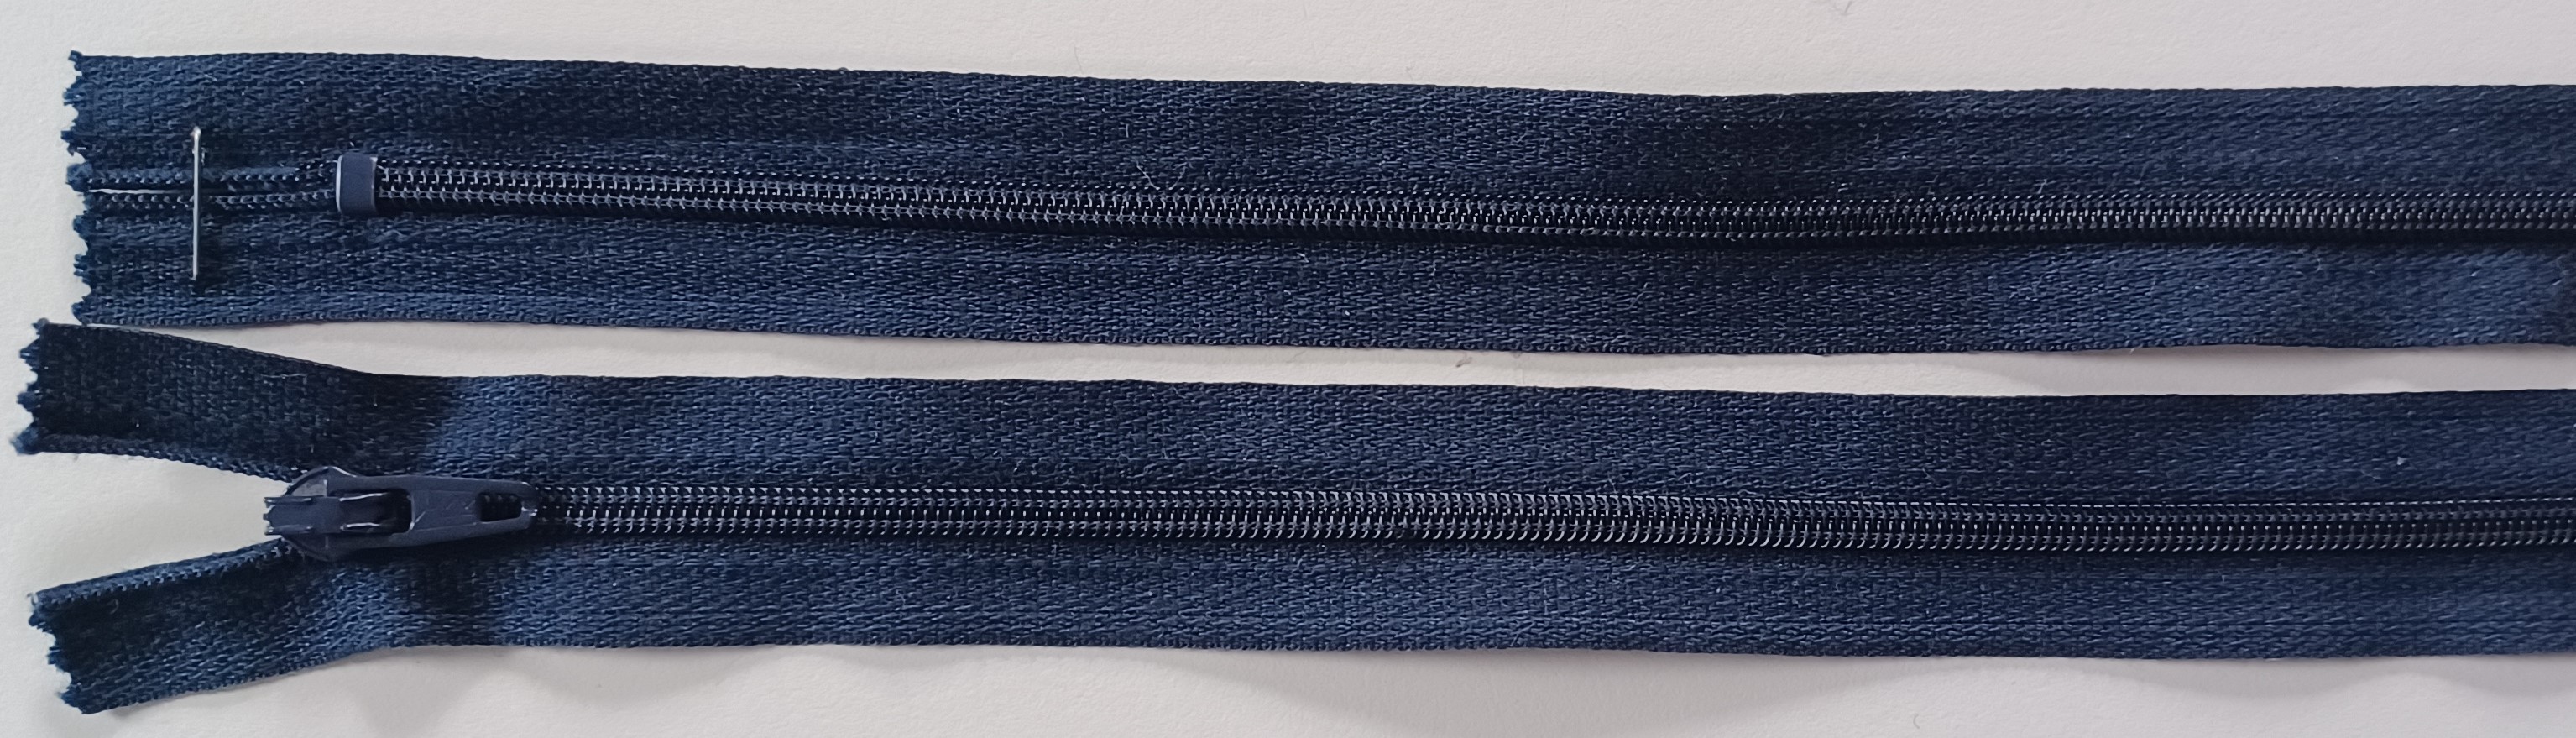 YKK 8" Navy Nylon Coil Zipper